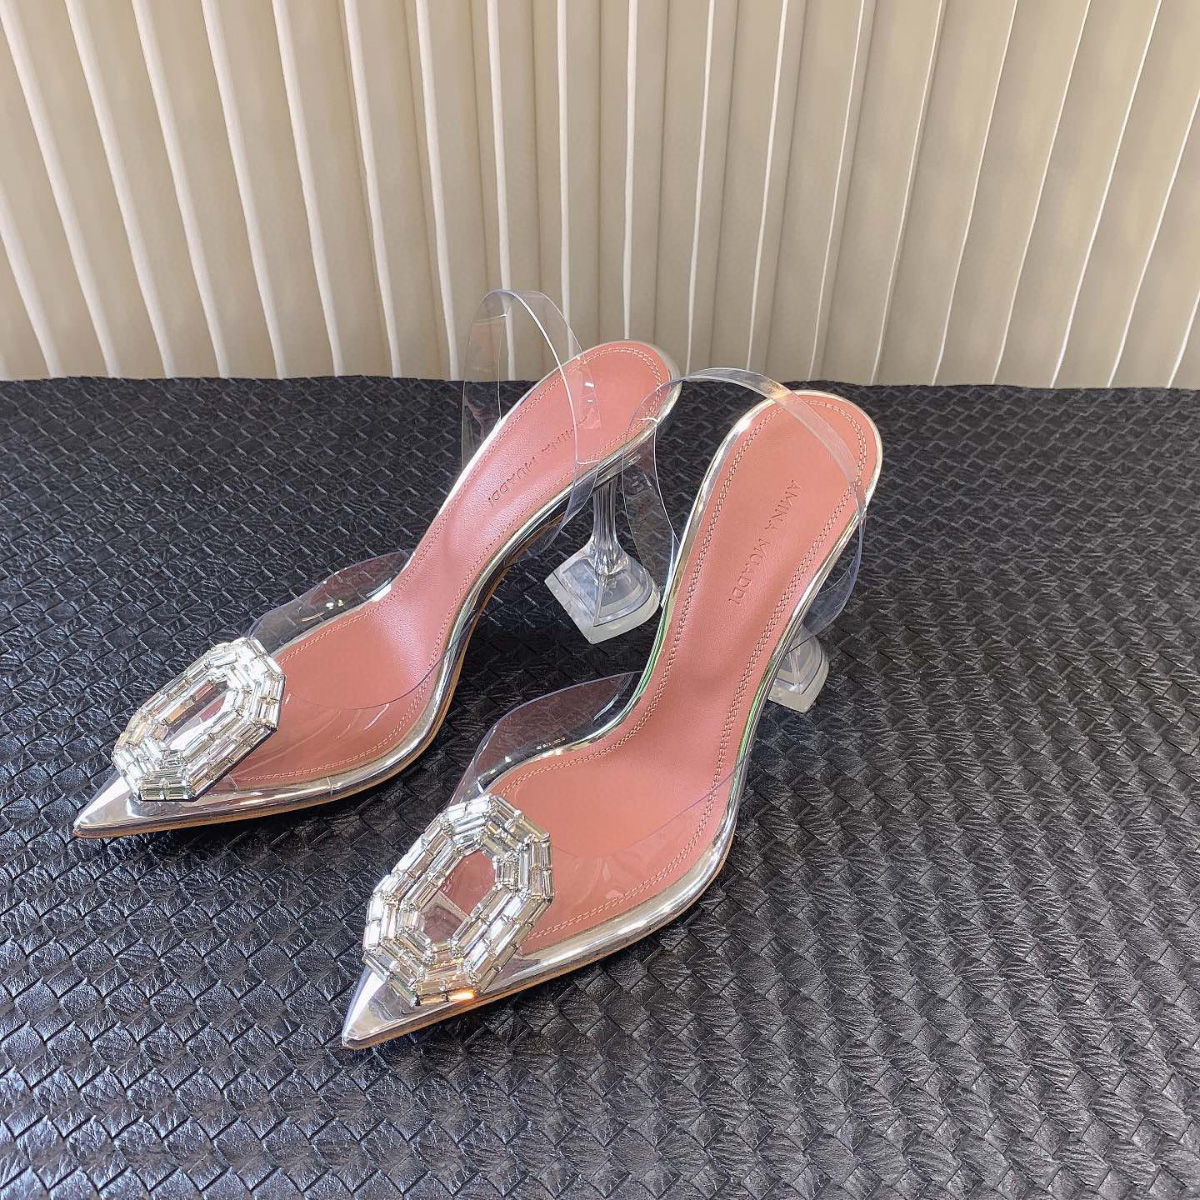 Amina Muaddi Camelia Crystal-EmbellishedPVC Pumps Shoes Spool Stileetto Heels Sandals女性の豪華なデザイナードレスシューズイブニングスリングバックストラップ工場靴